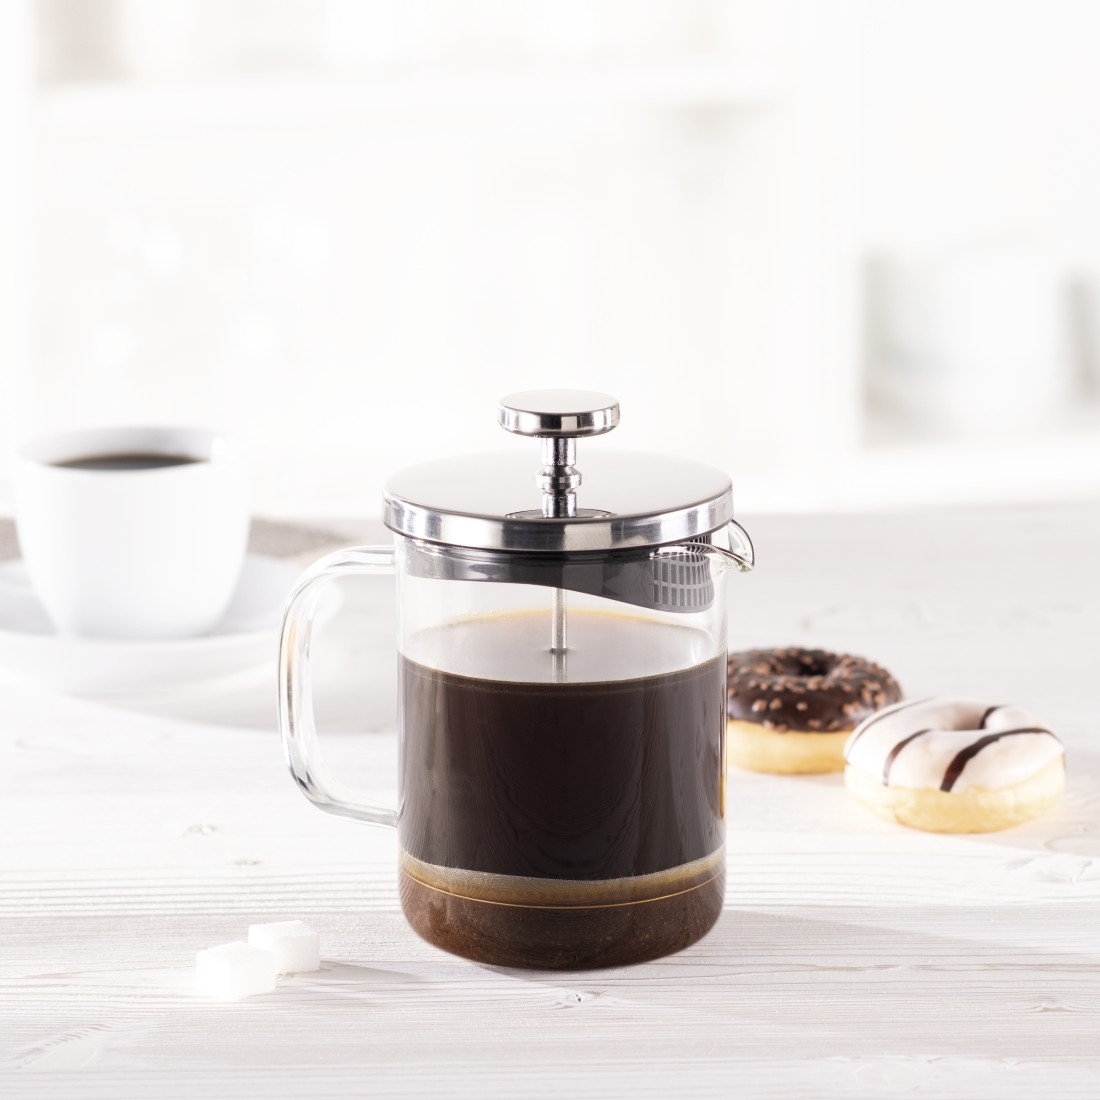 awx2 Druckfähige Anwendung 2 - Xavax, Tee-/Kaffee-Bereiter, 0,6 Liter